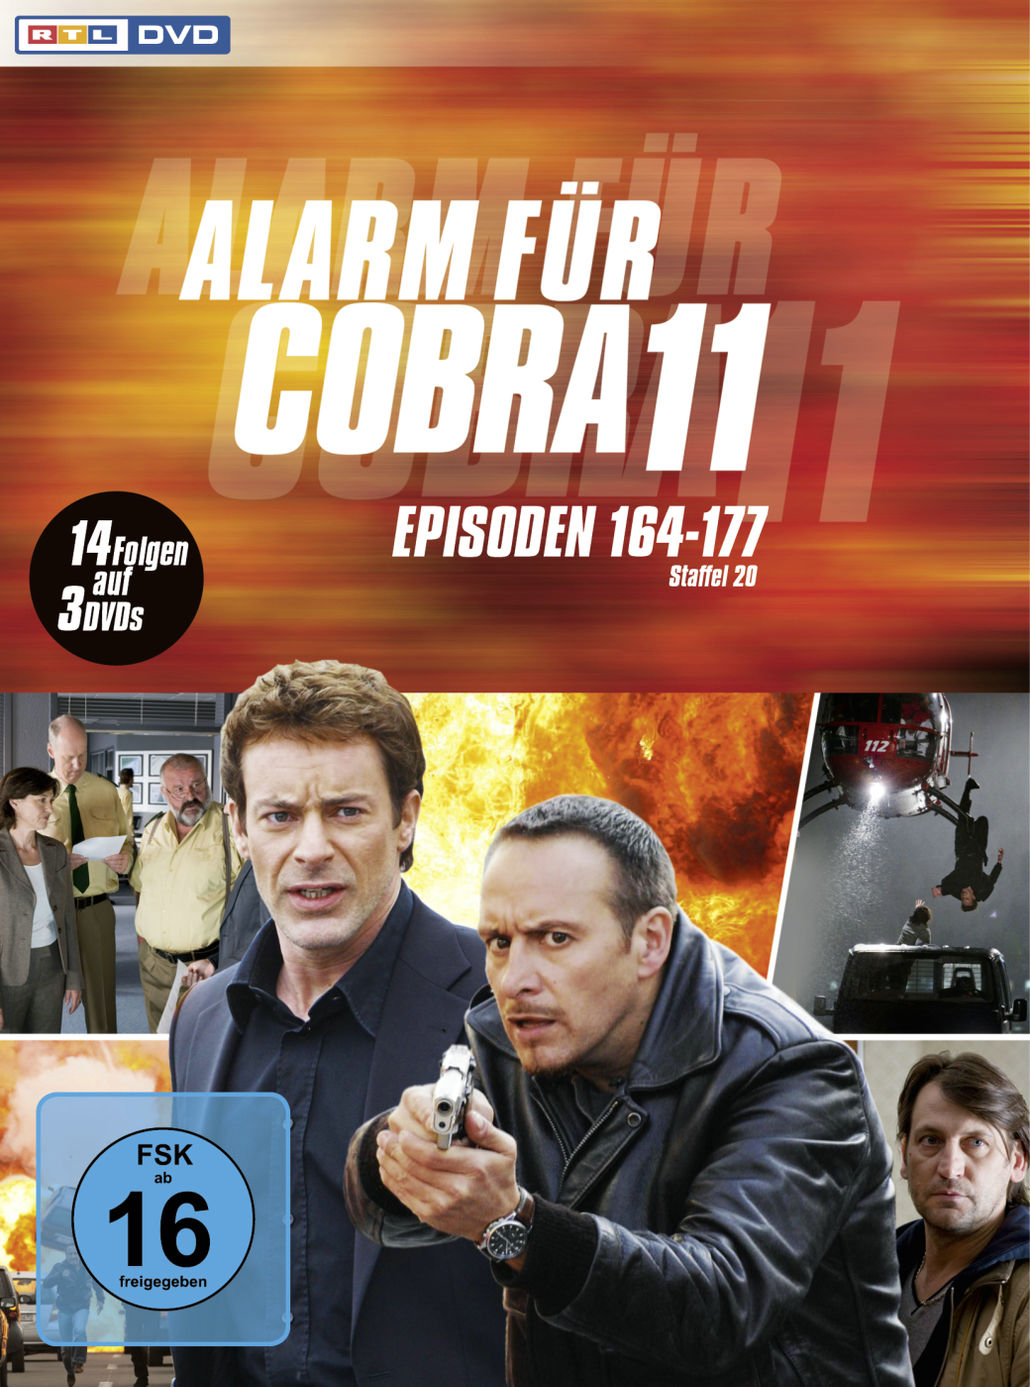 Alarm für Cobra 11 - Staffel 20 & 21 DVD | Weltbild.de